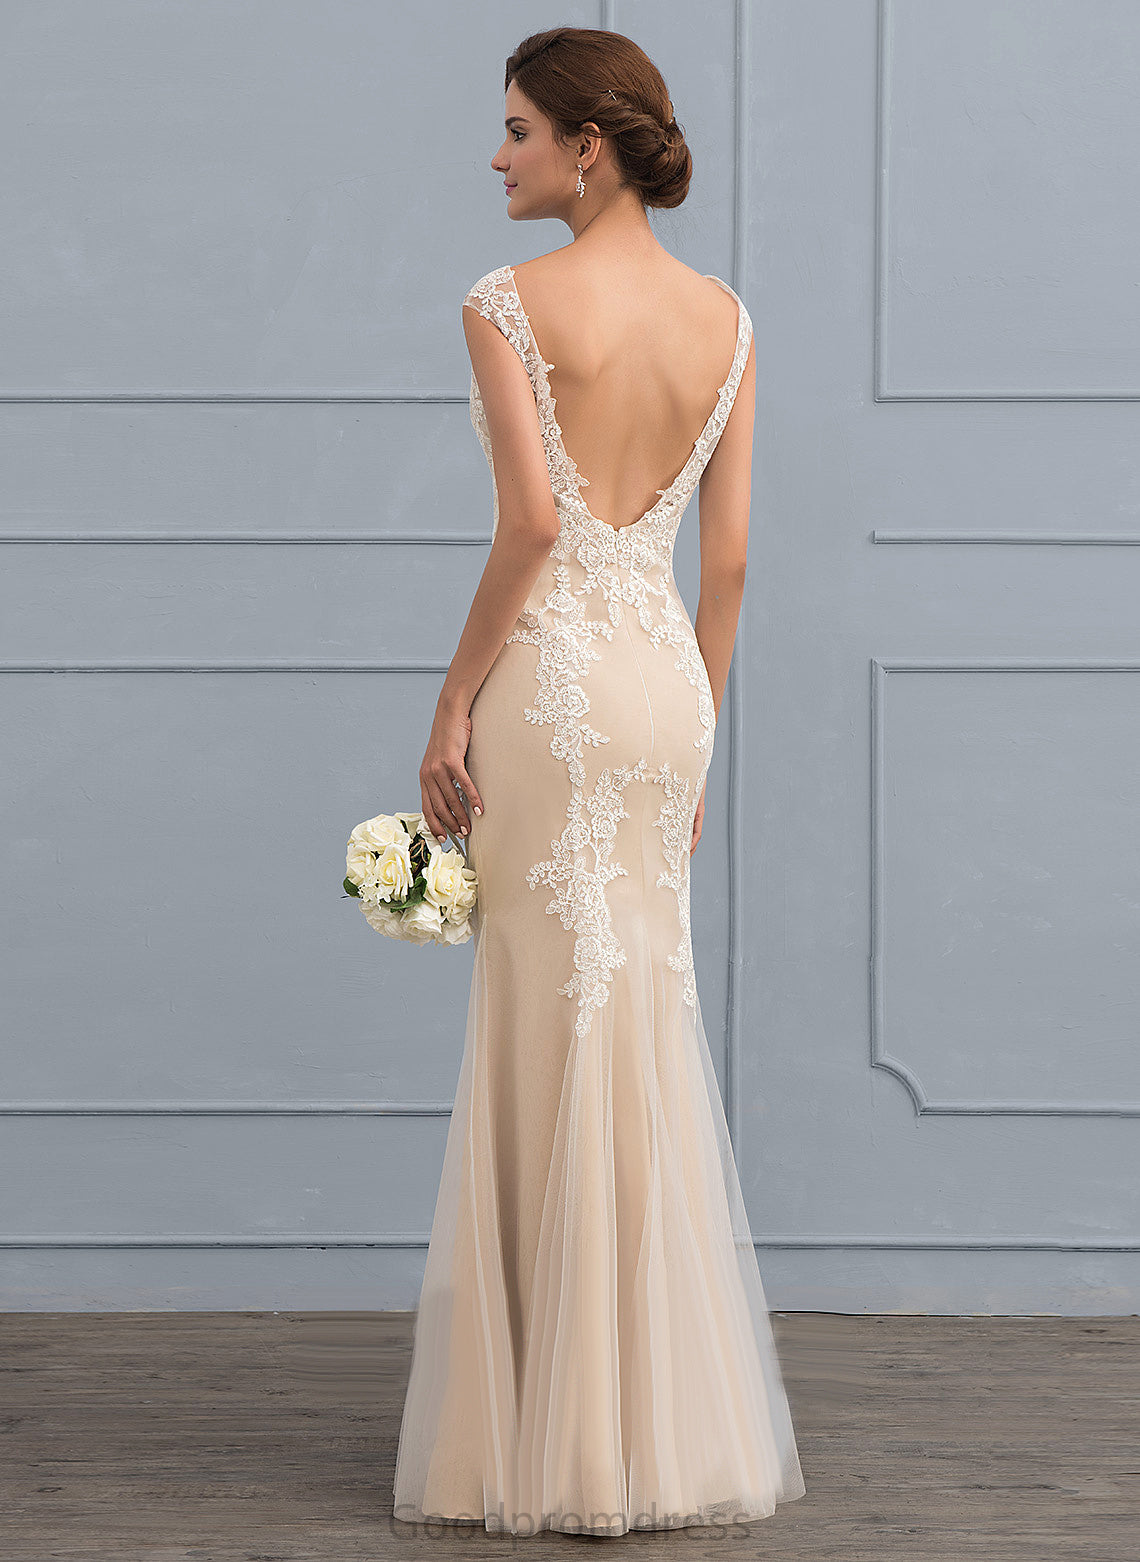 Tulle Eliza Dress Wedding Dresses Wedding Lace Floor-Length Trumpet/Mermaid